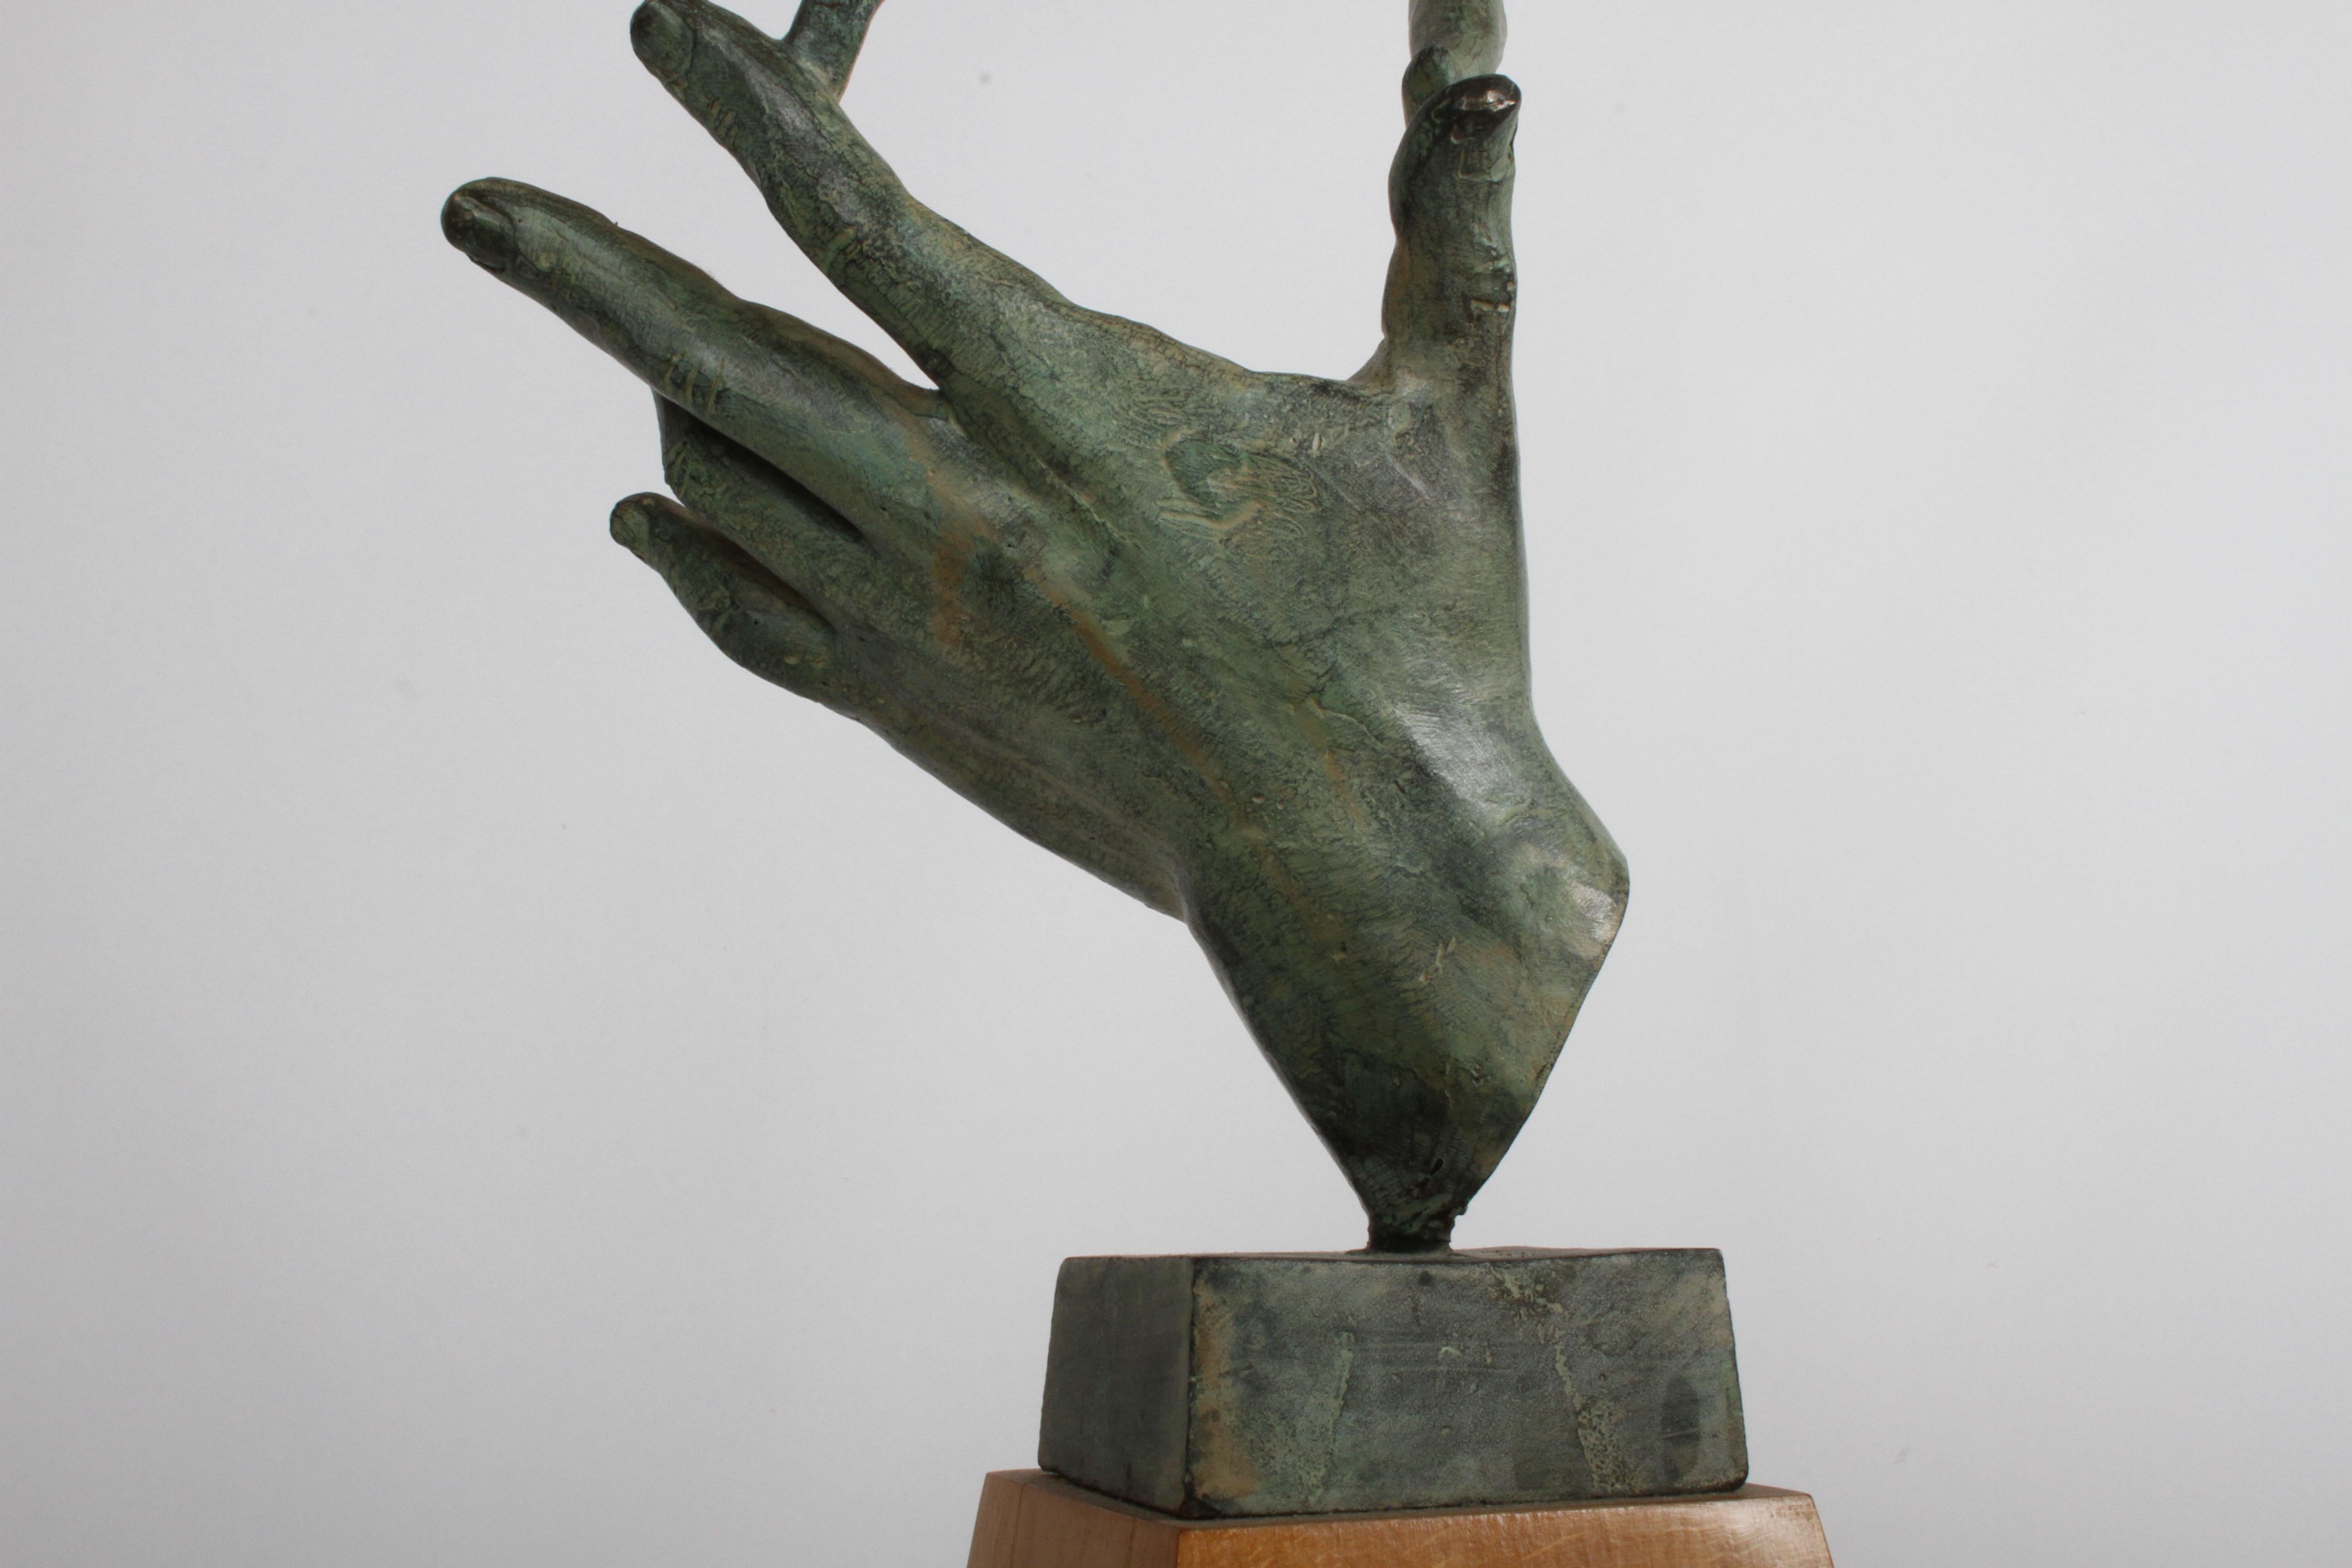  The Hand of God Bronze Sculpture After Carl Milles Sculptor  7